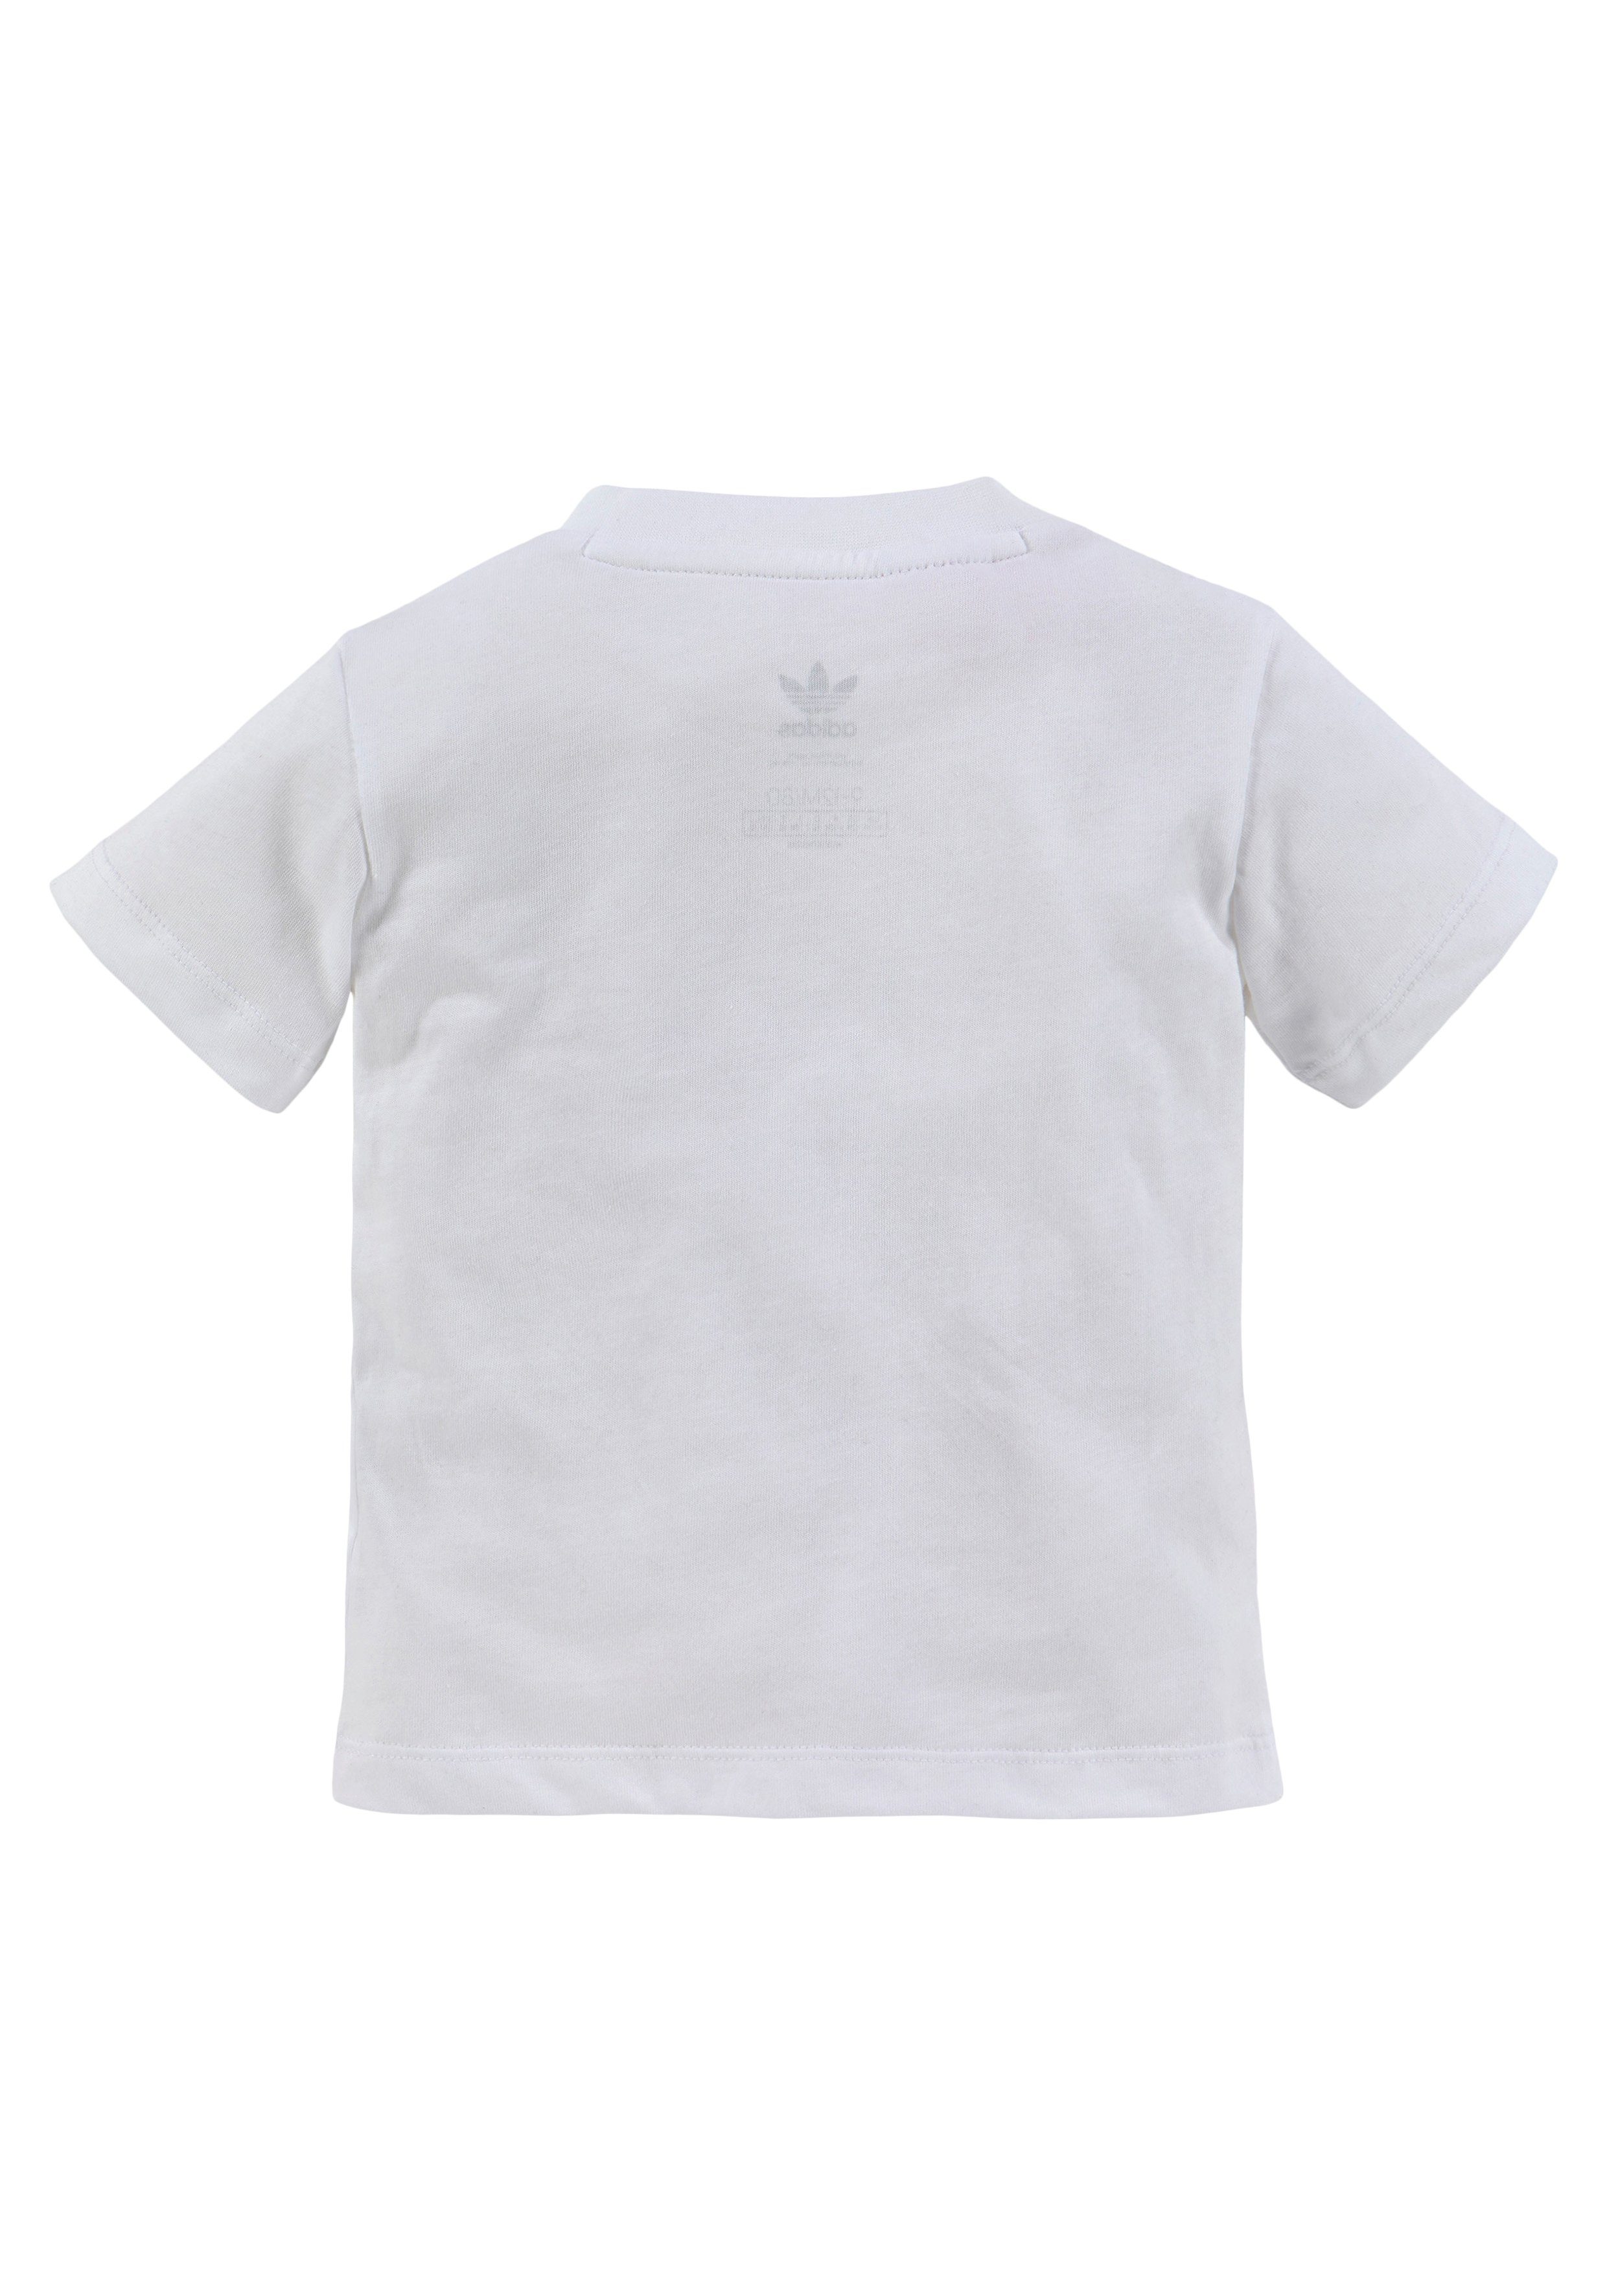 T-Shirt Bliss Shorts Originals Pink UND White adidas & SHORTS TREFOIL / SET (Set)